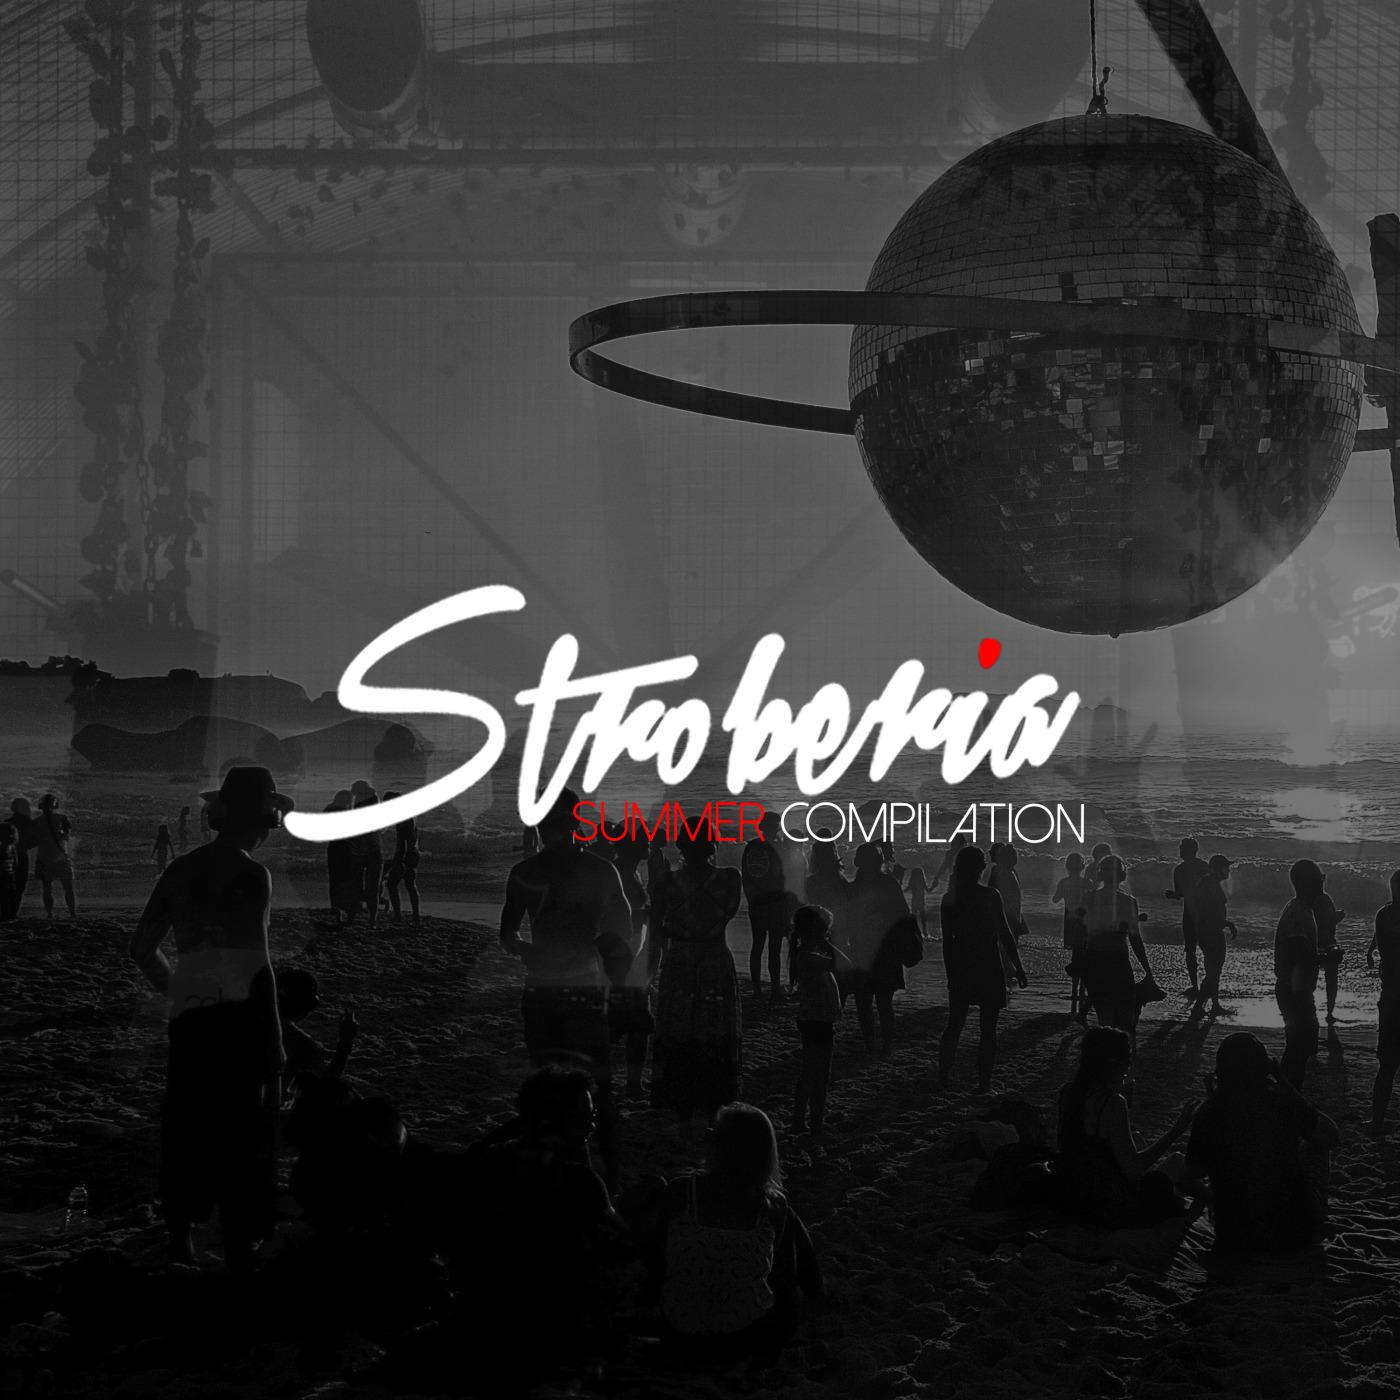 Stroberia: Summer Compilation 001